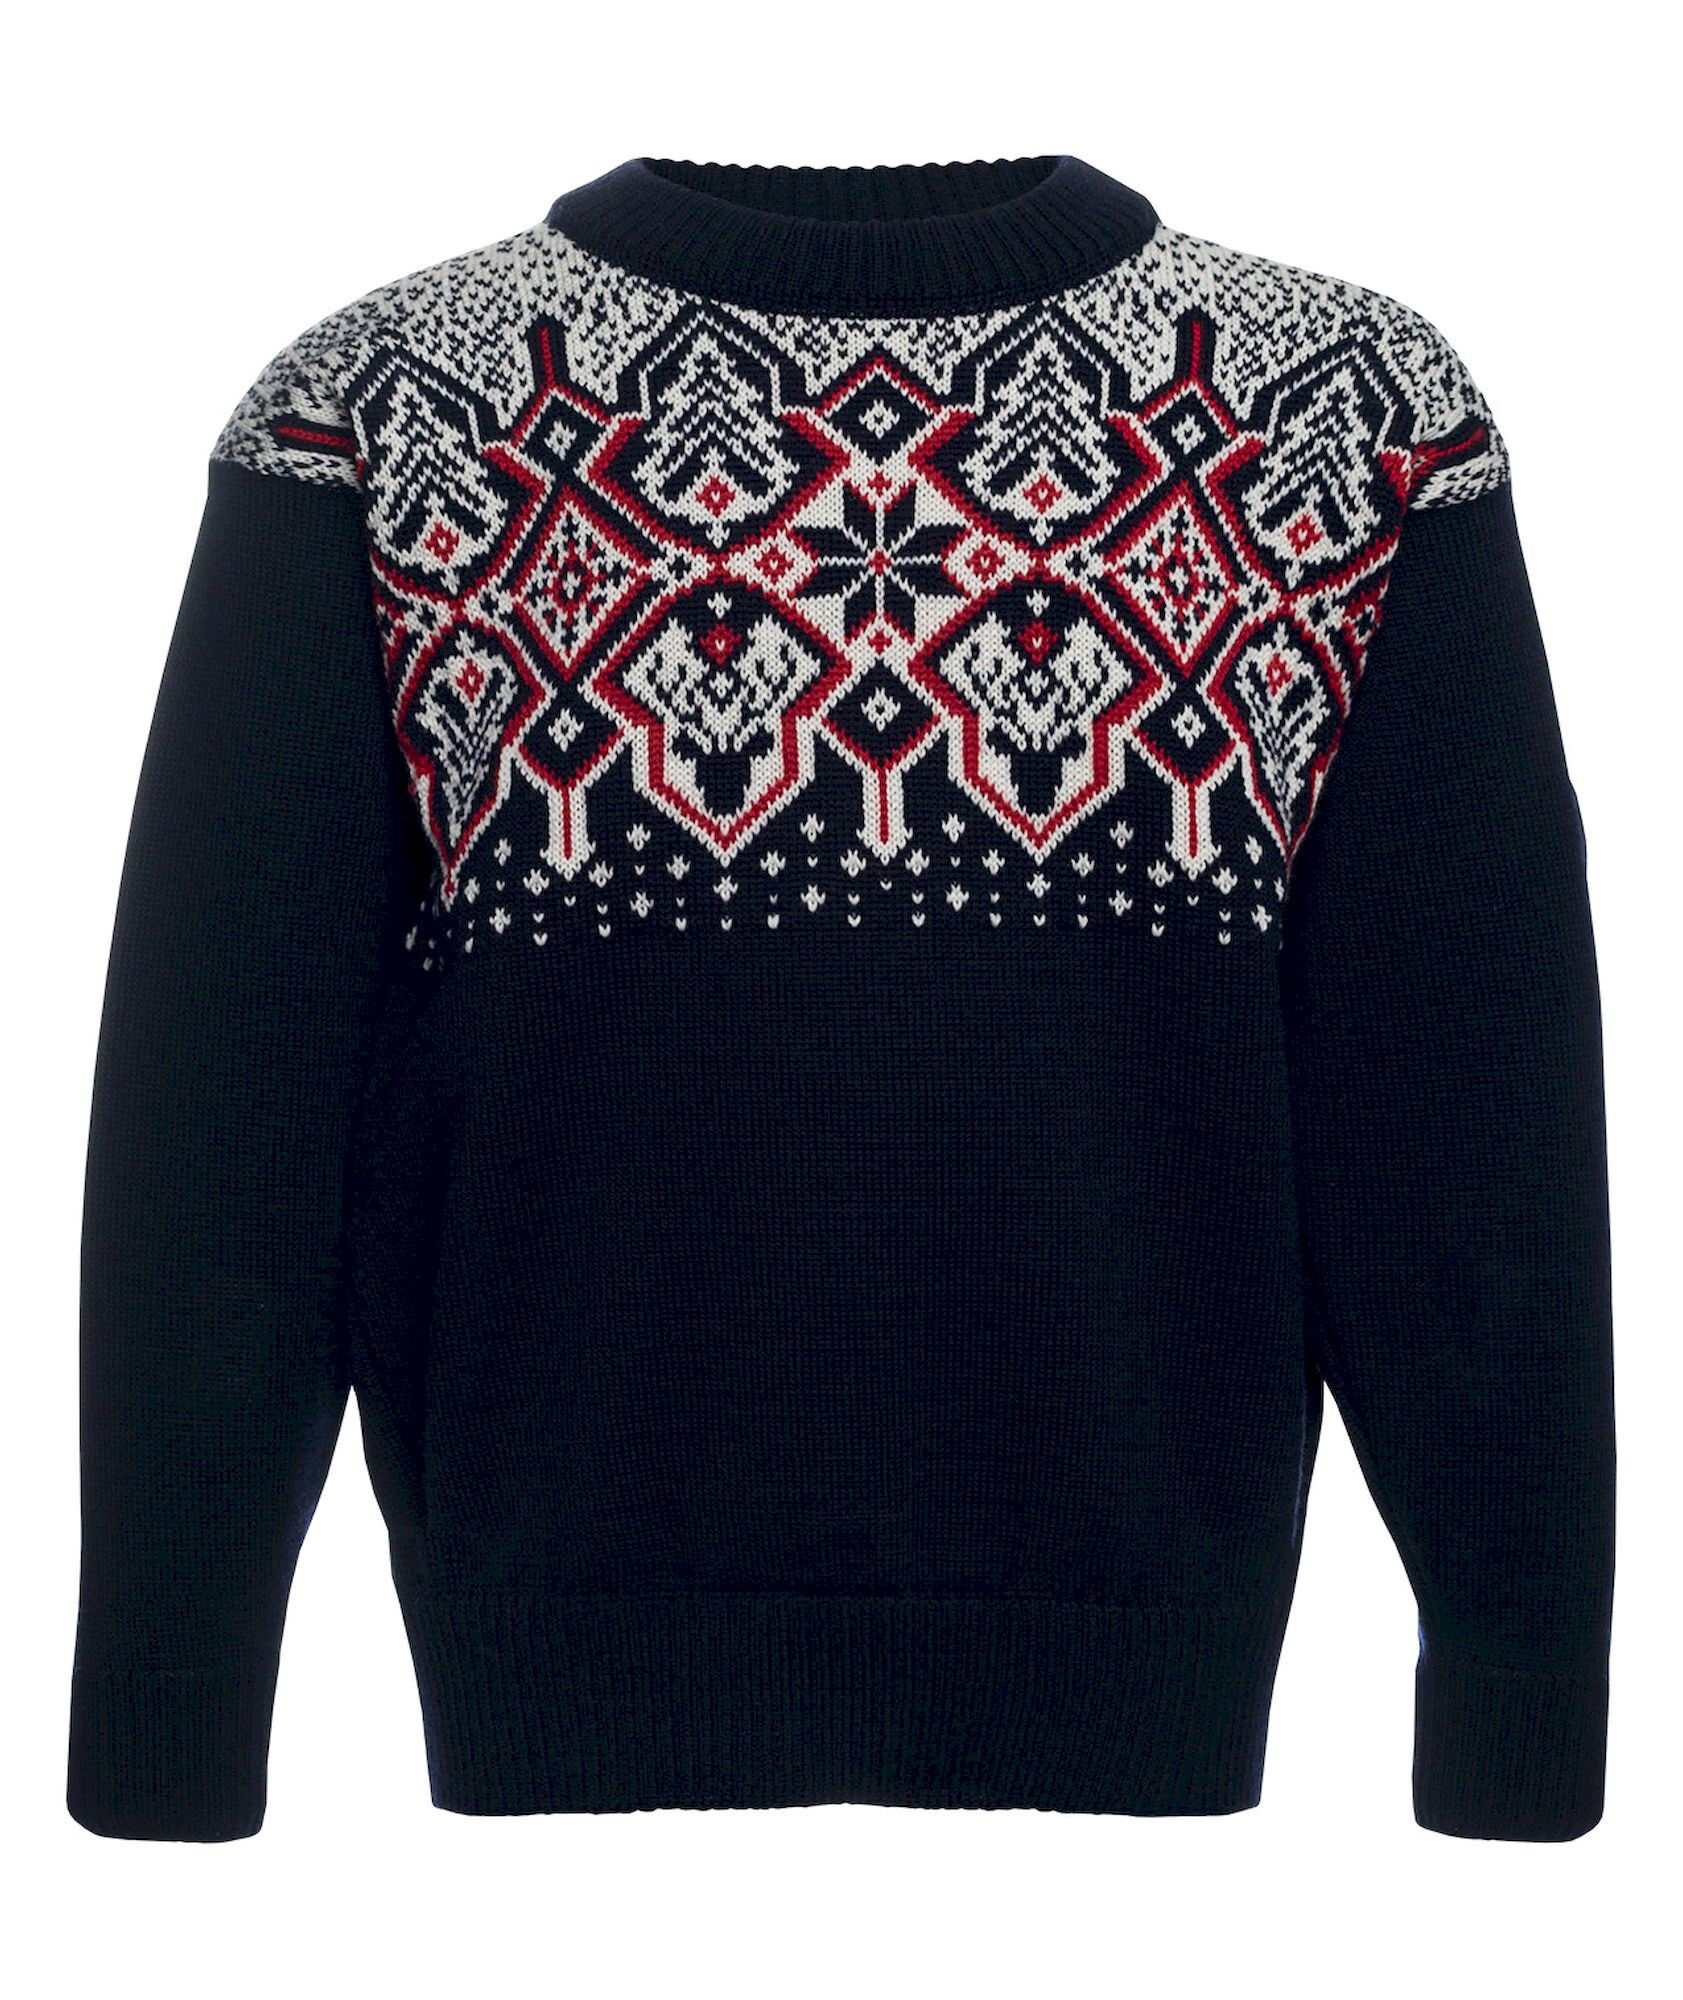 Dale of Norway Winterland Kids Sweater - Pullover in lana merino - Bambino | Hardloop